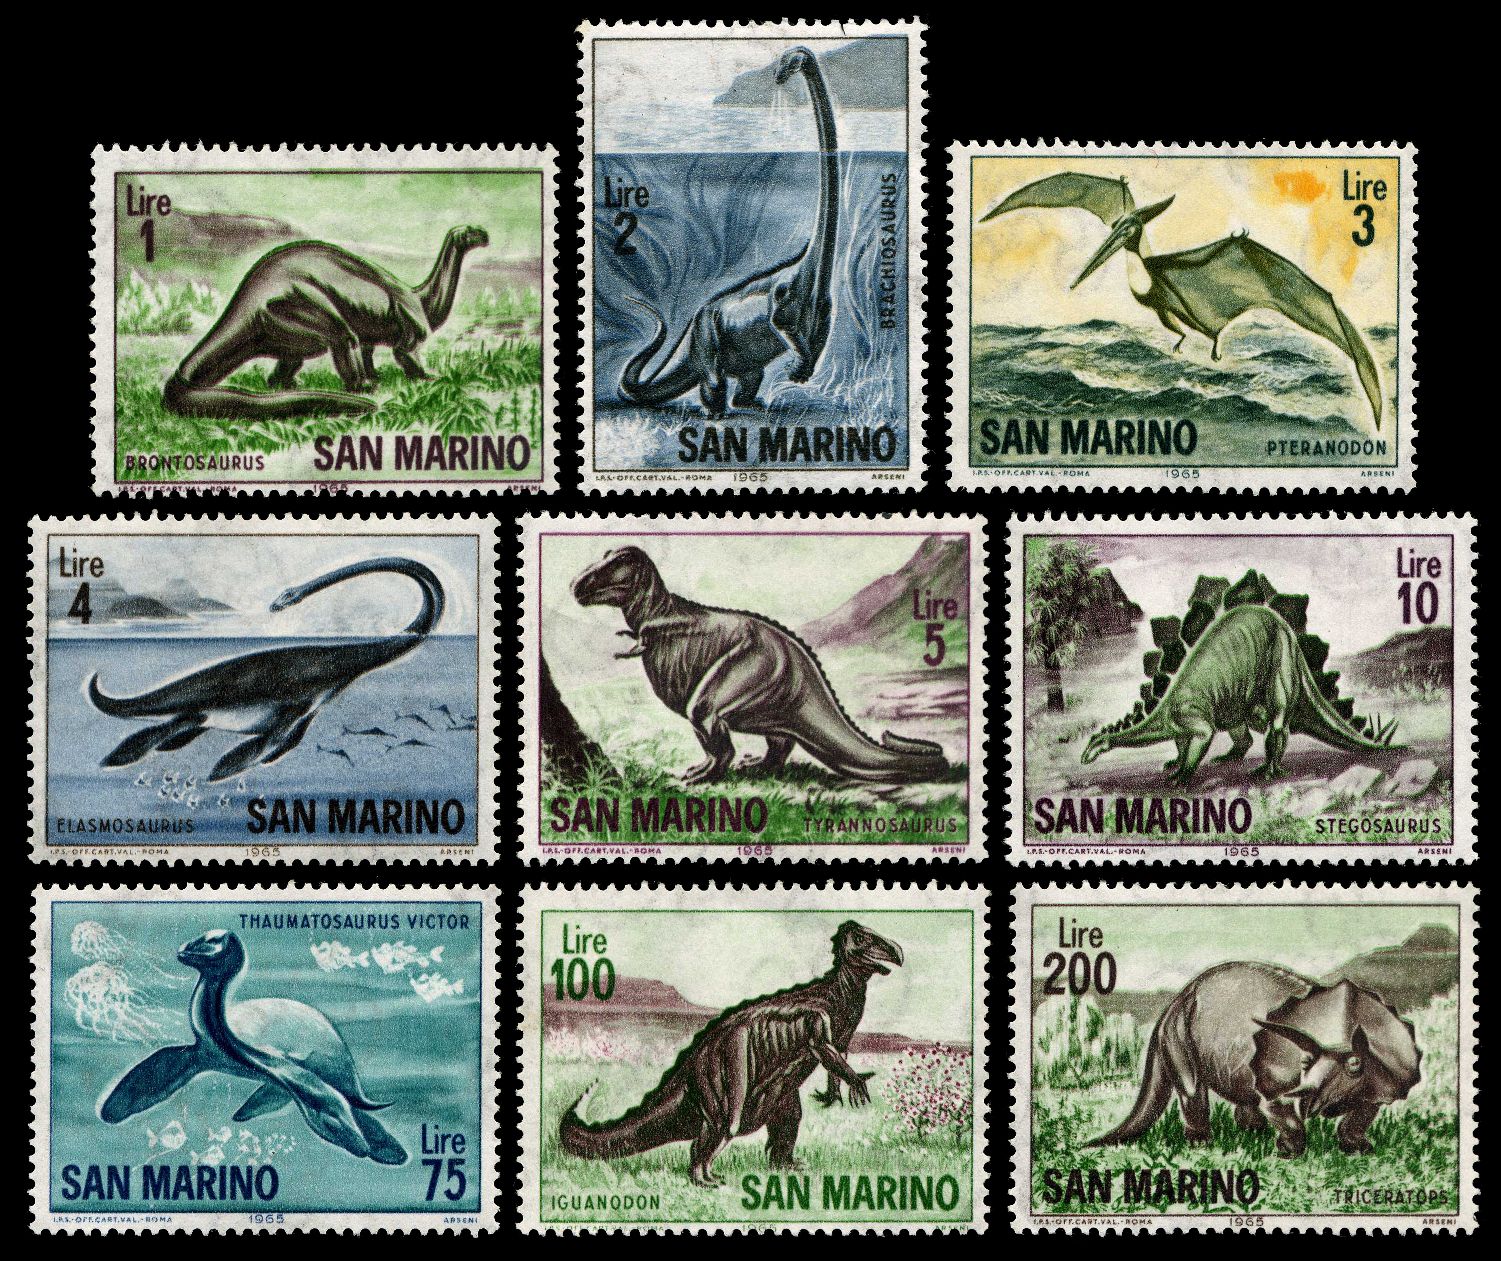 Prehistoric animals on stamps of San Marino